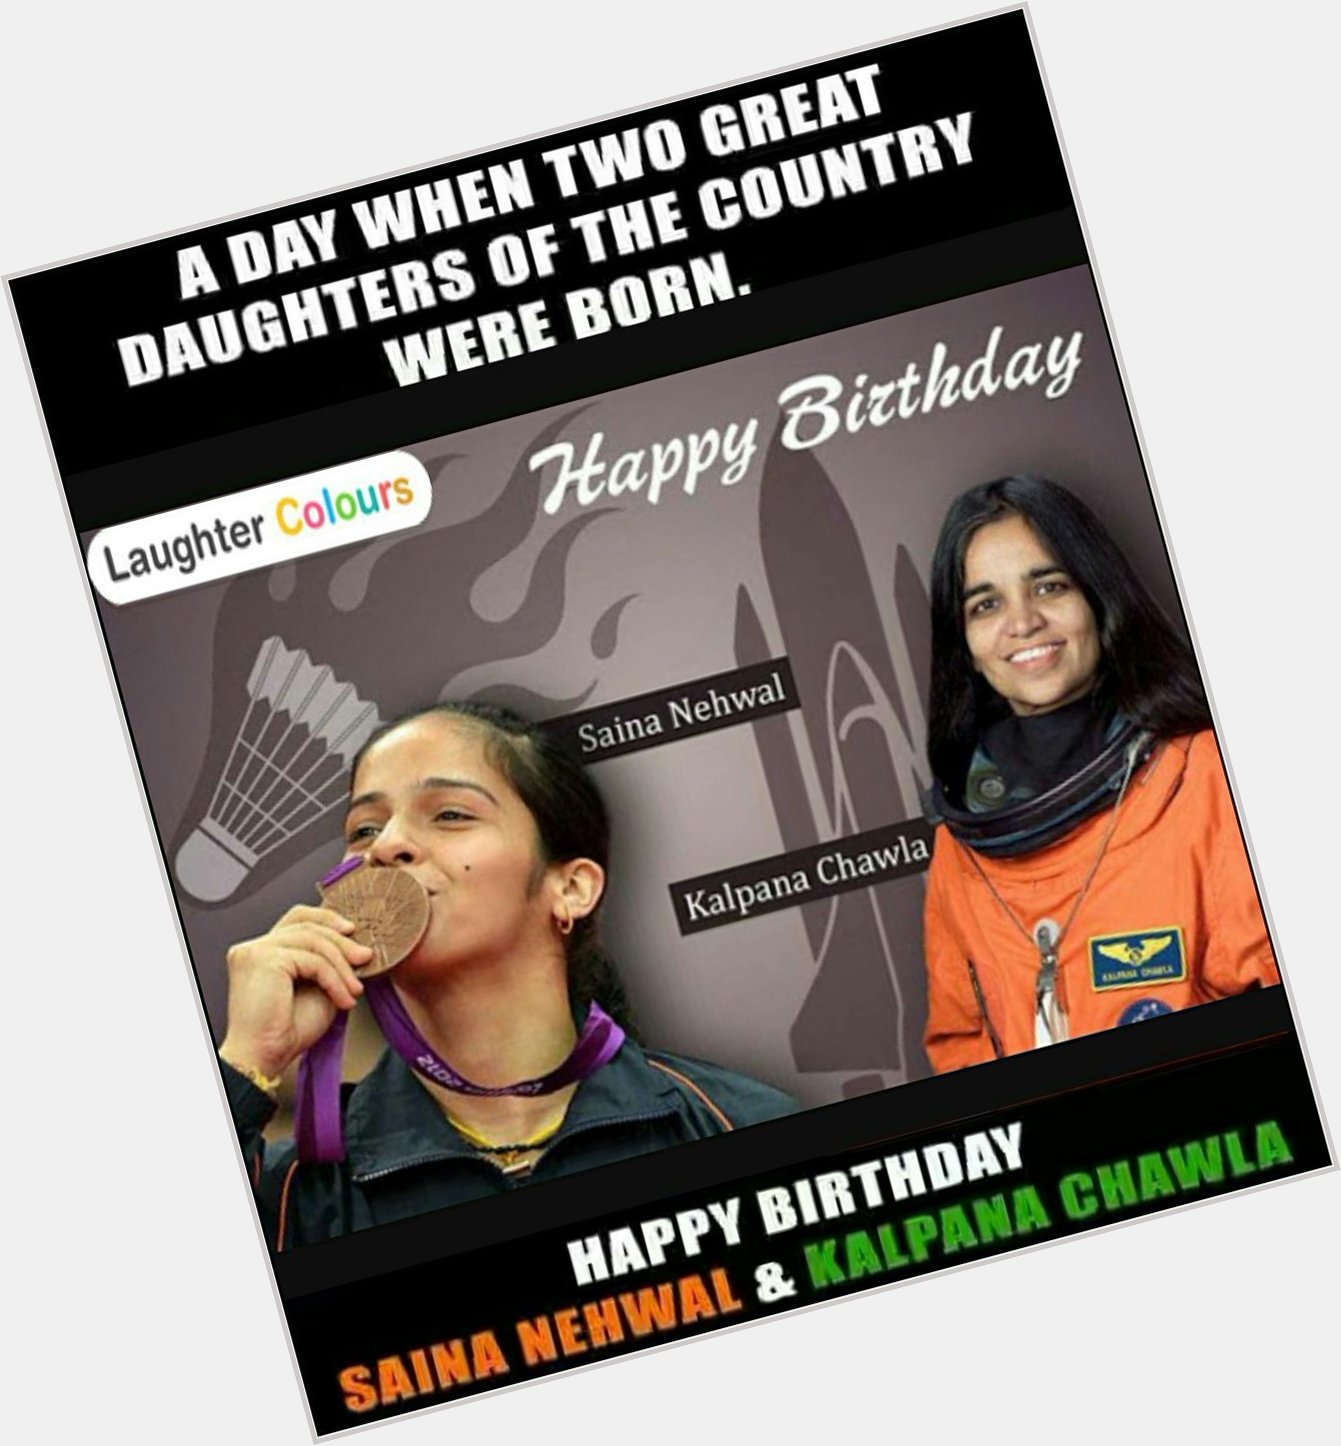 Happy birthday Kalpana Chawla and Saina Nehwal
Pride of nation   